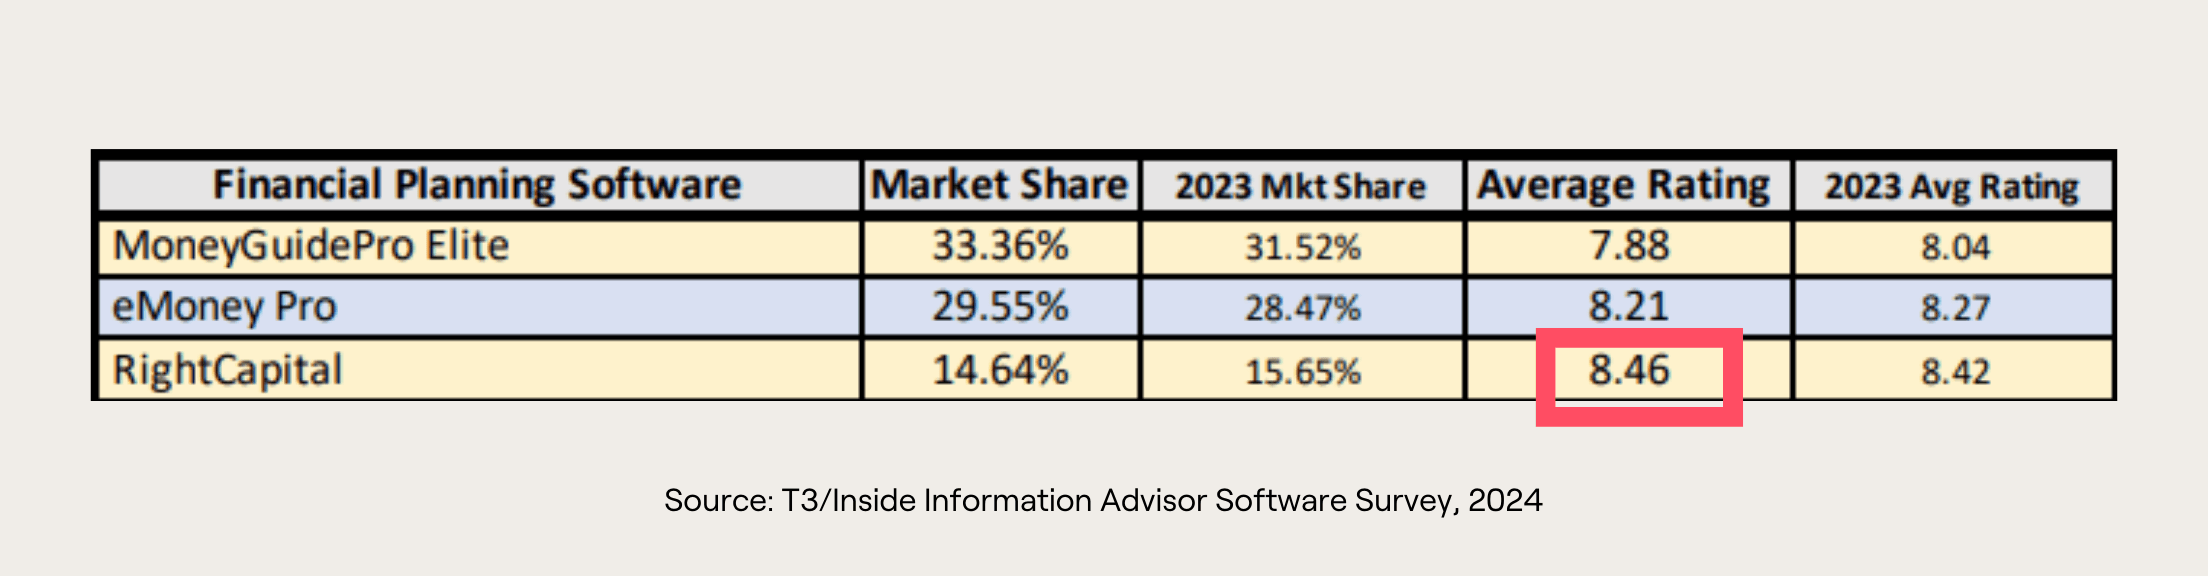 2024 T3/Inside Information Advisor Software Survey market share and average rating for MoneyGuidePro Elite, eMoney Pro, and RightCapital